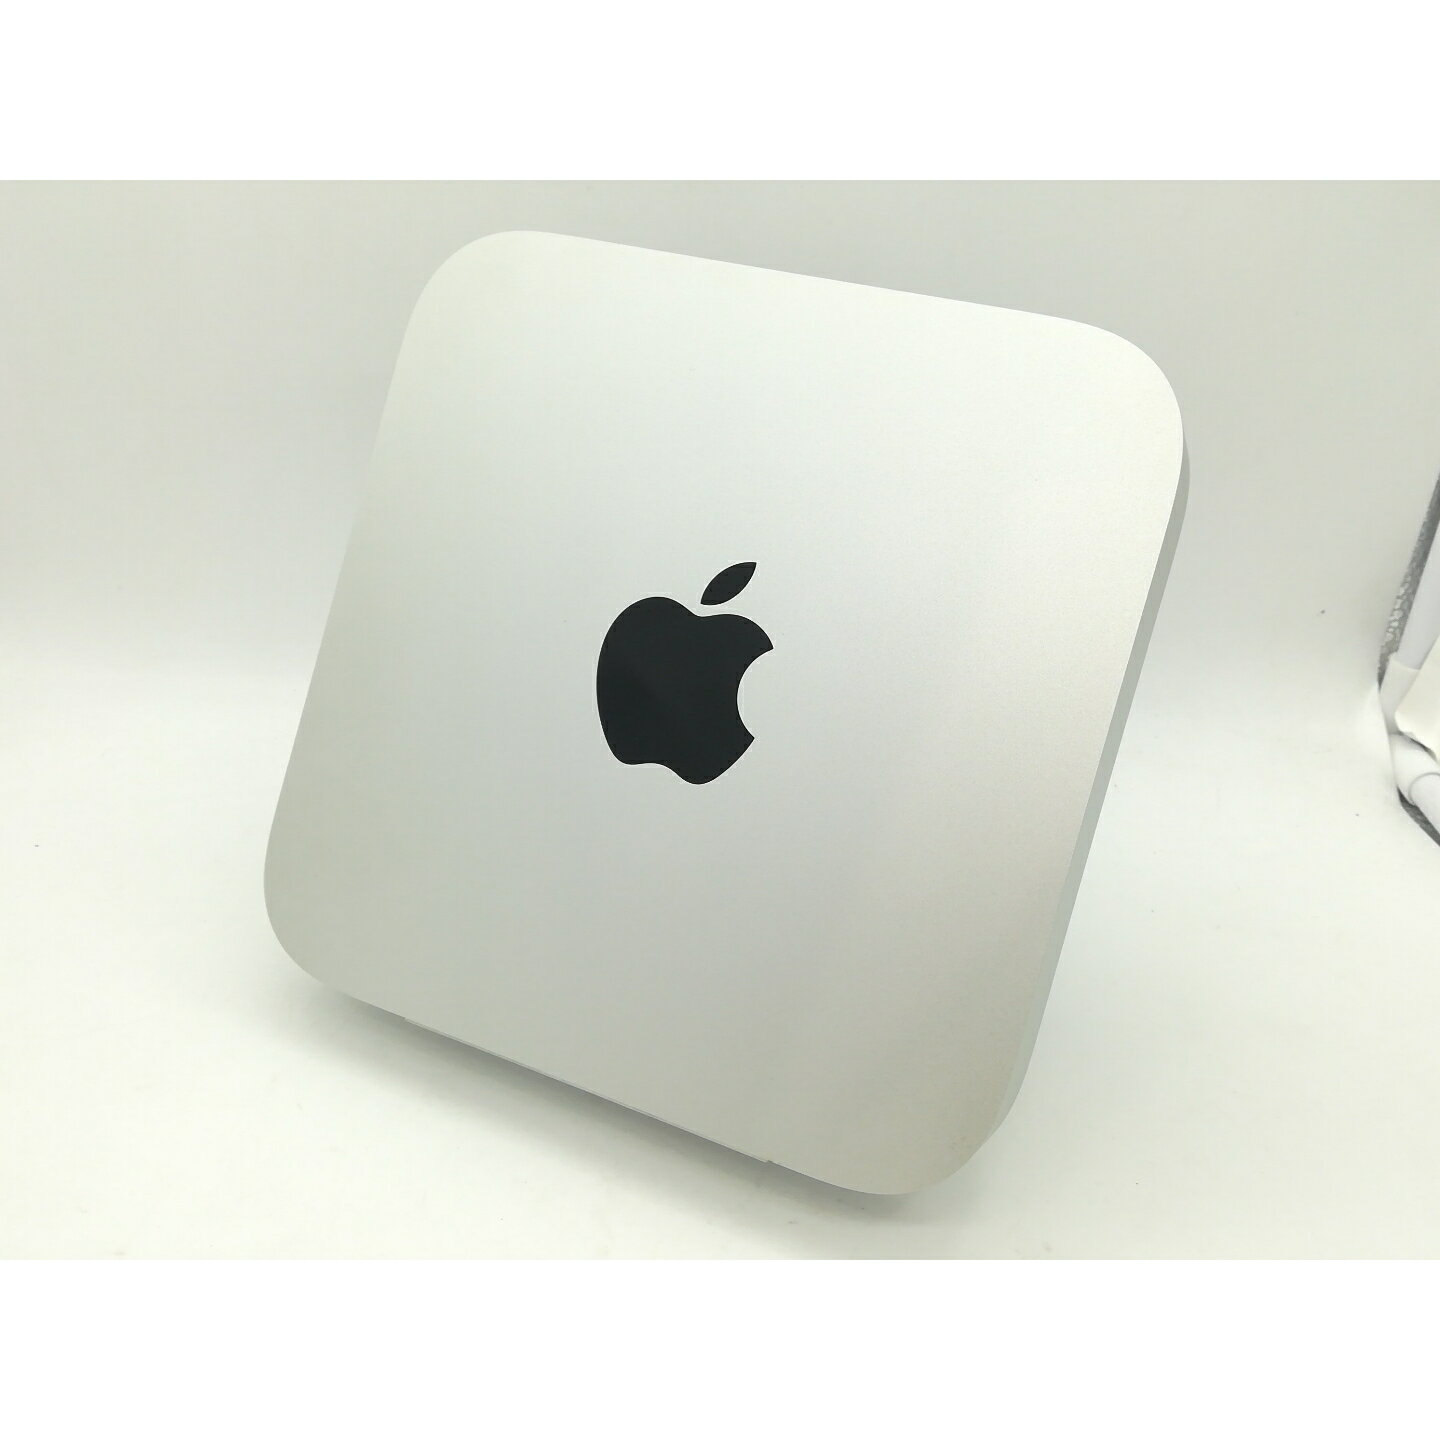 【中古】Apple Mac mini CTO (Late 2012) Core i5(2.5G)/16G/500G/Intel HD 4000【吉祥寺南口】保証期間1ヶ月【ランクB】